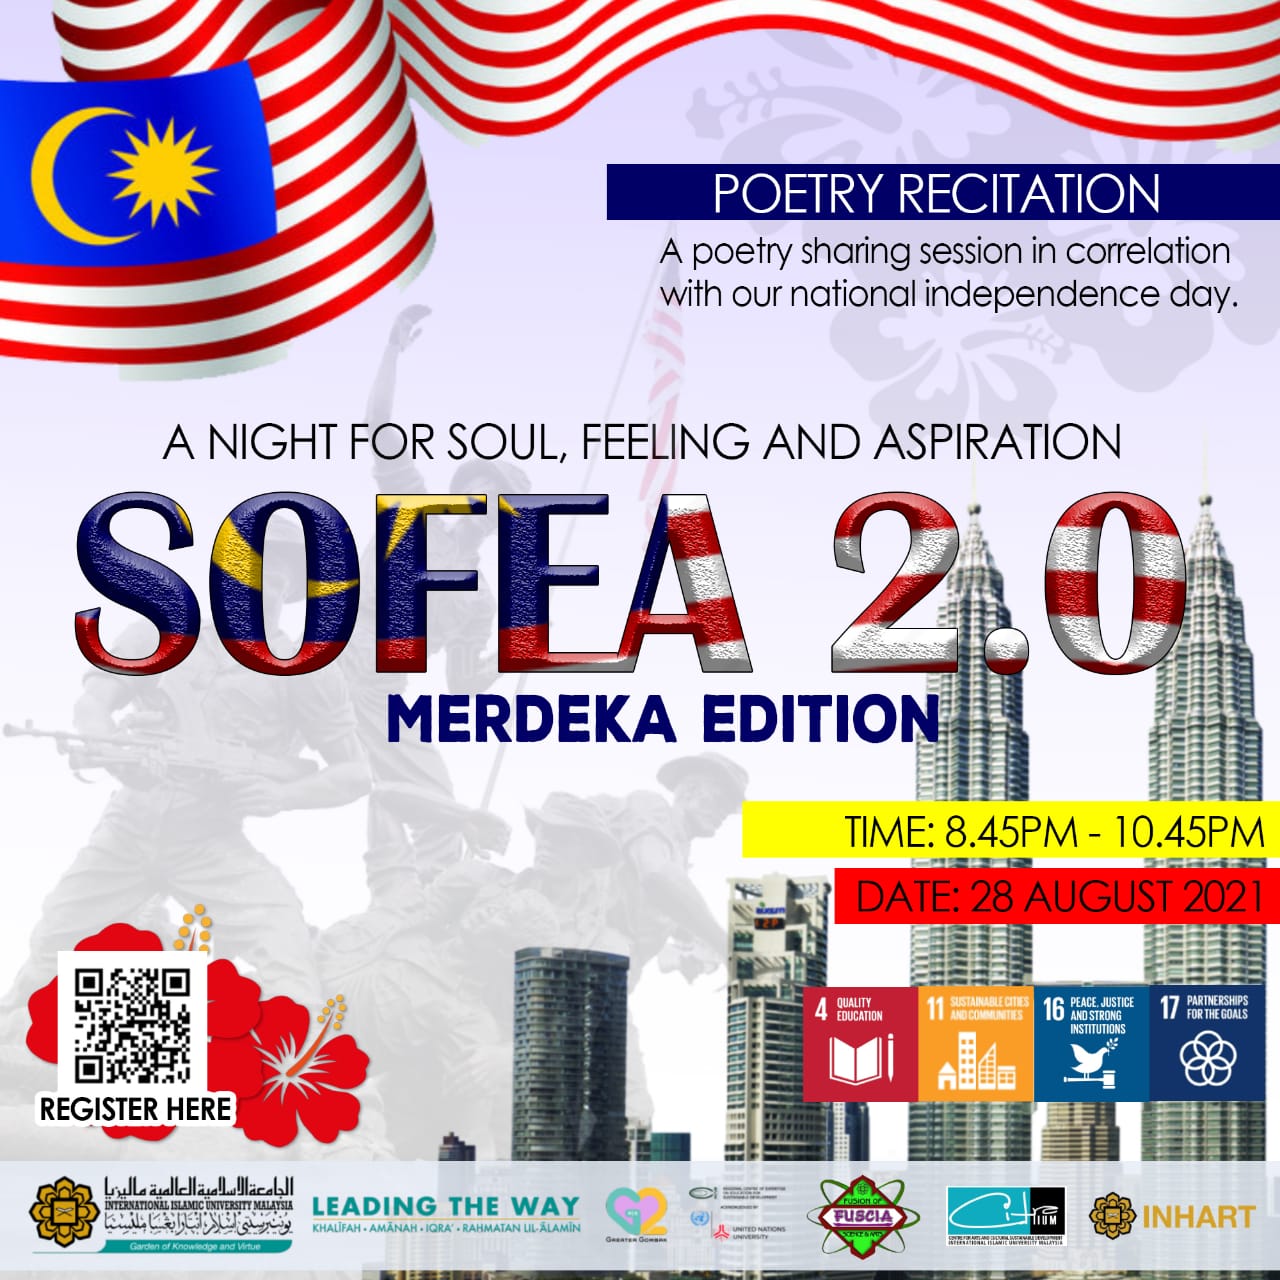 A Night for SOFEA (Soul, Feeling and Aspiration) 2.0: Merdeka Edition